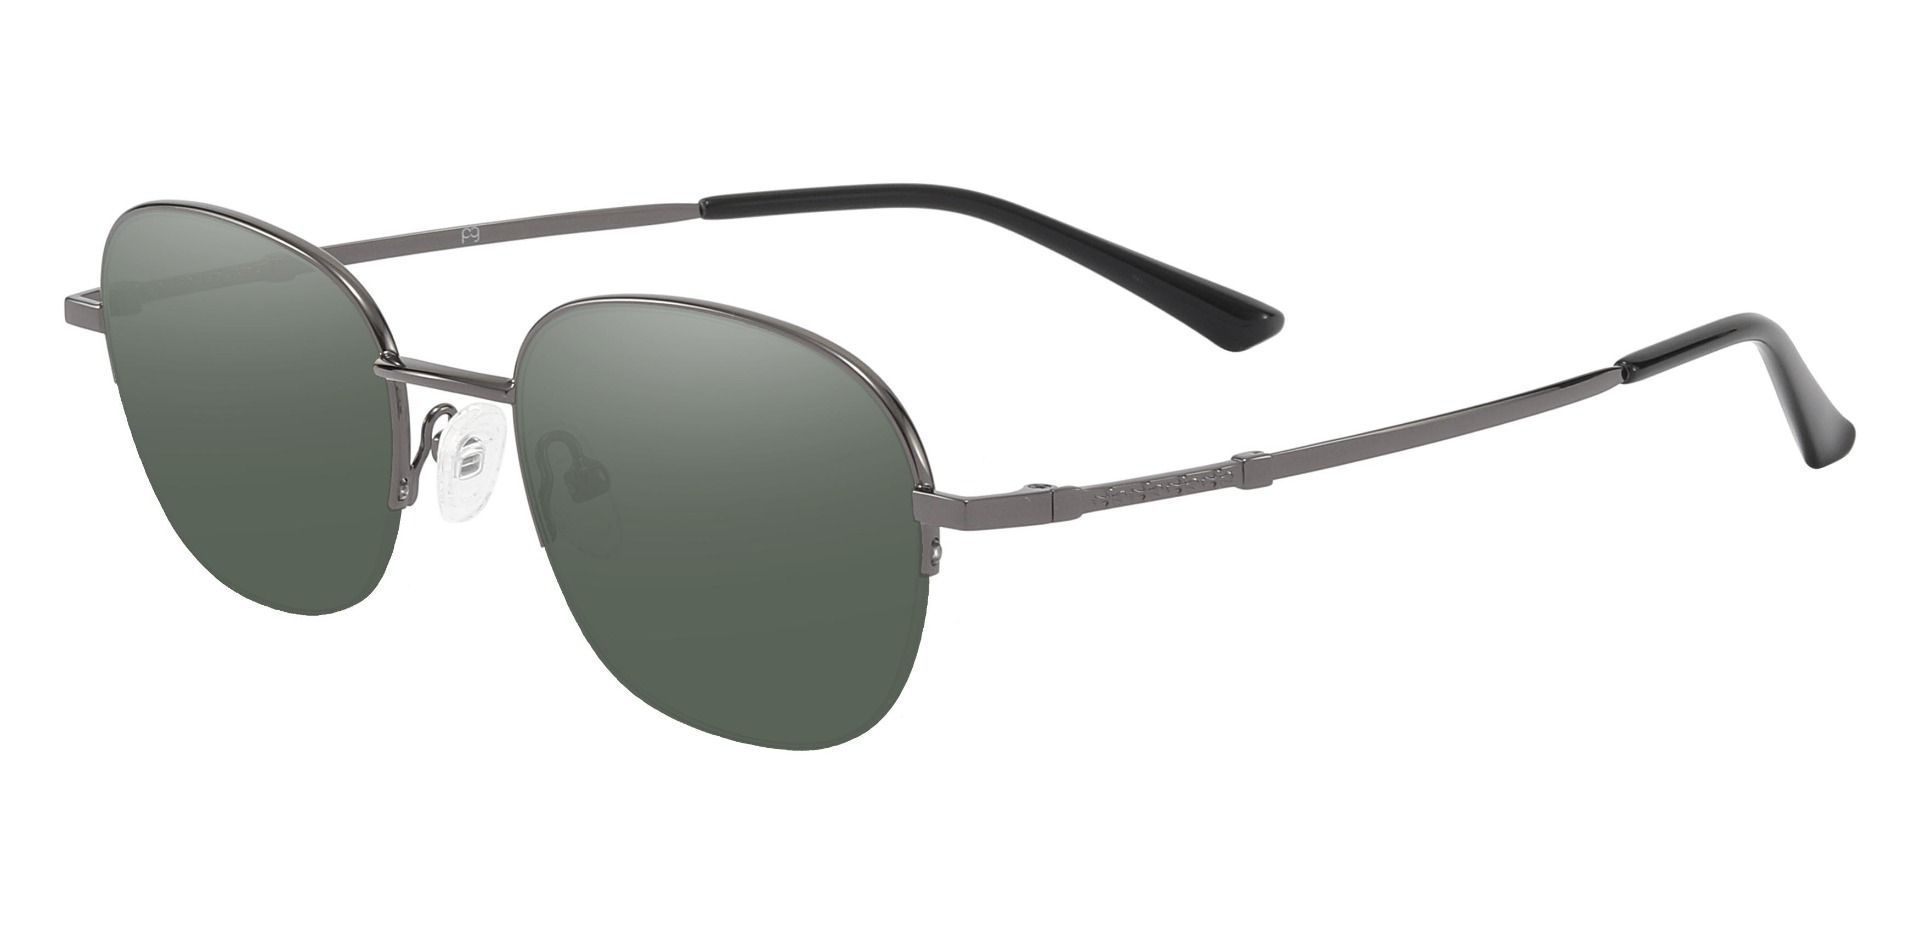 Rochester Oval Prescription Sunglasses - Gray Frame With Green Lenses